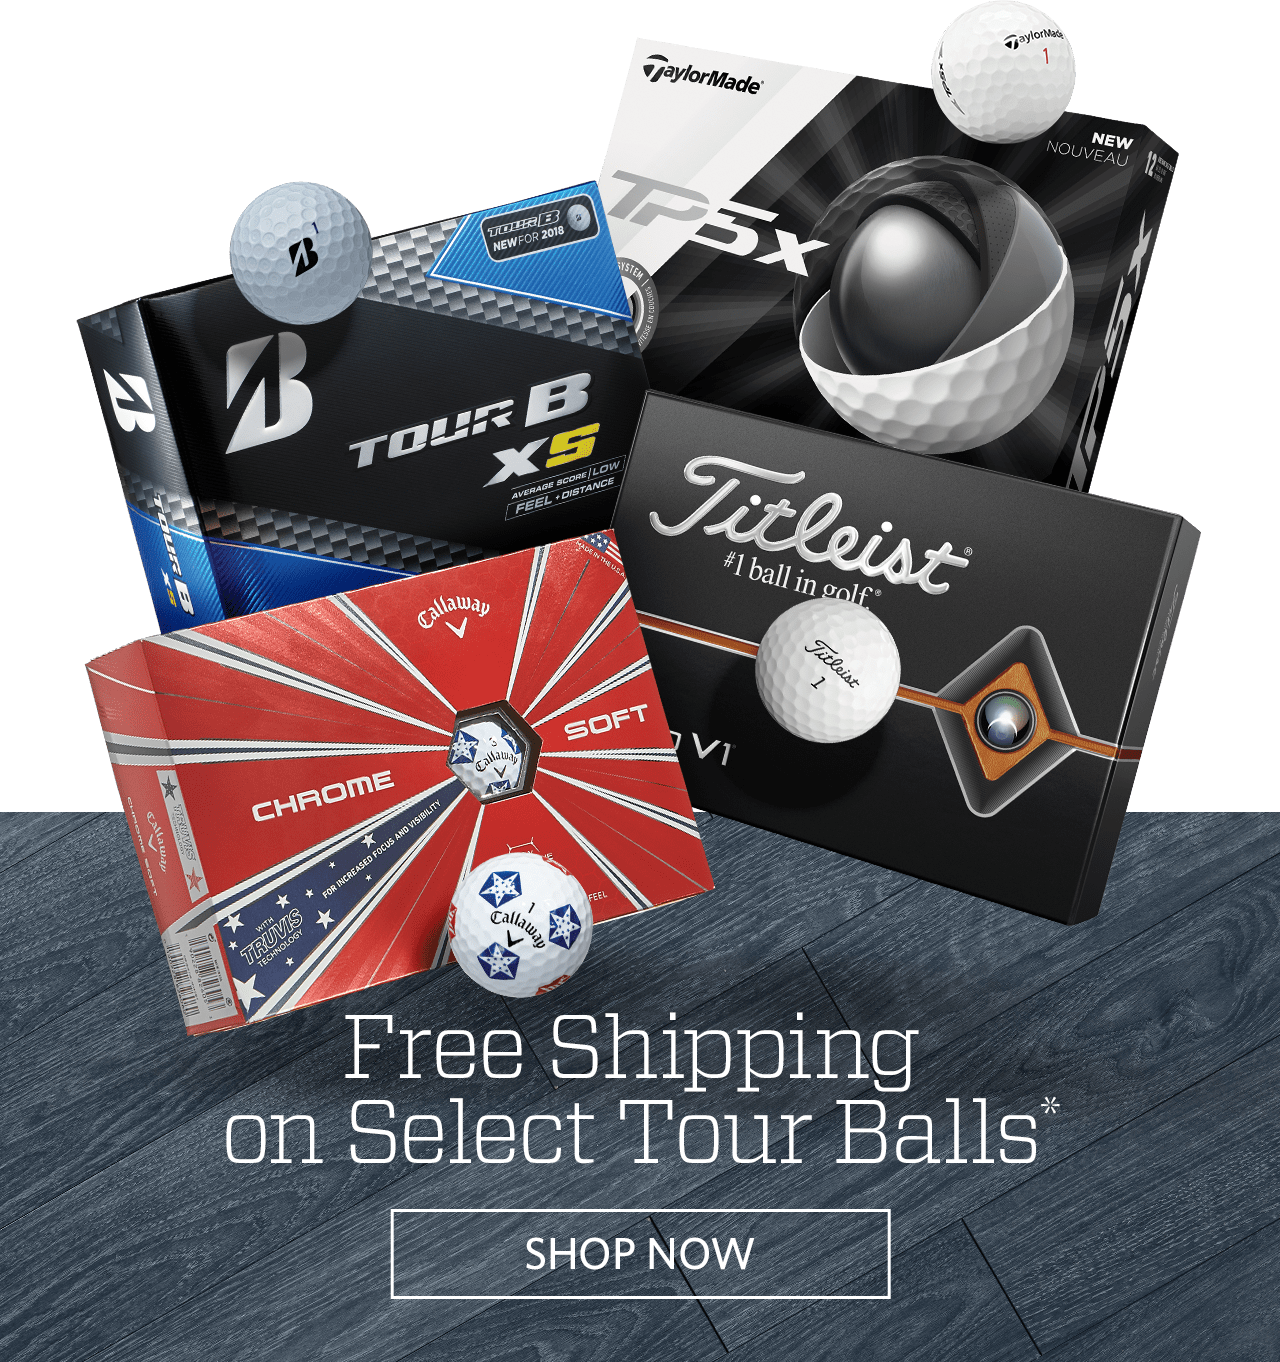 Free Shipping on Tour Balls | SHOP NOW